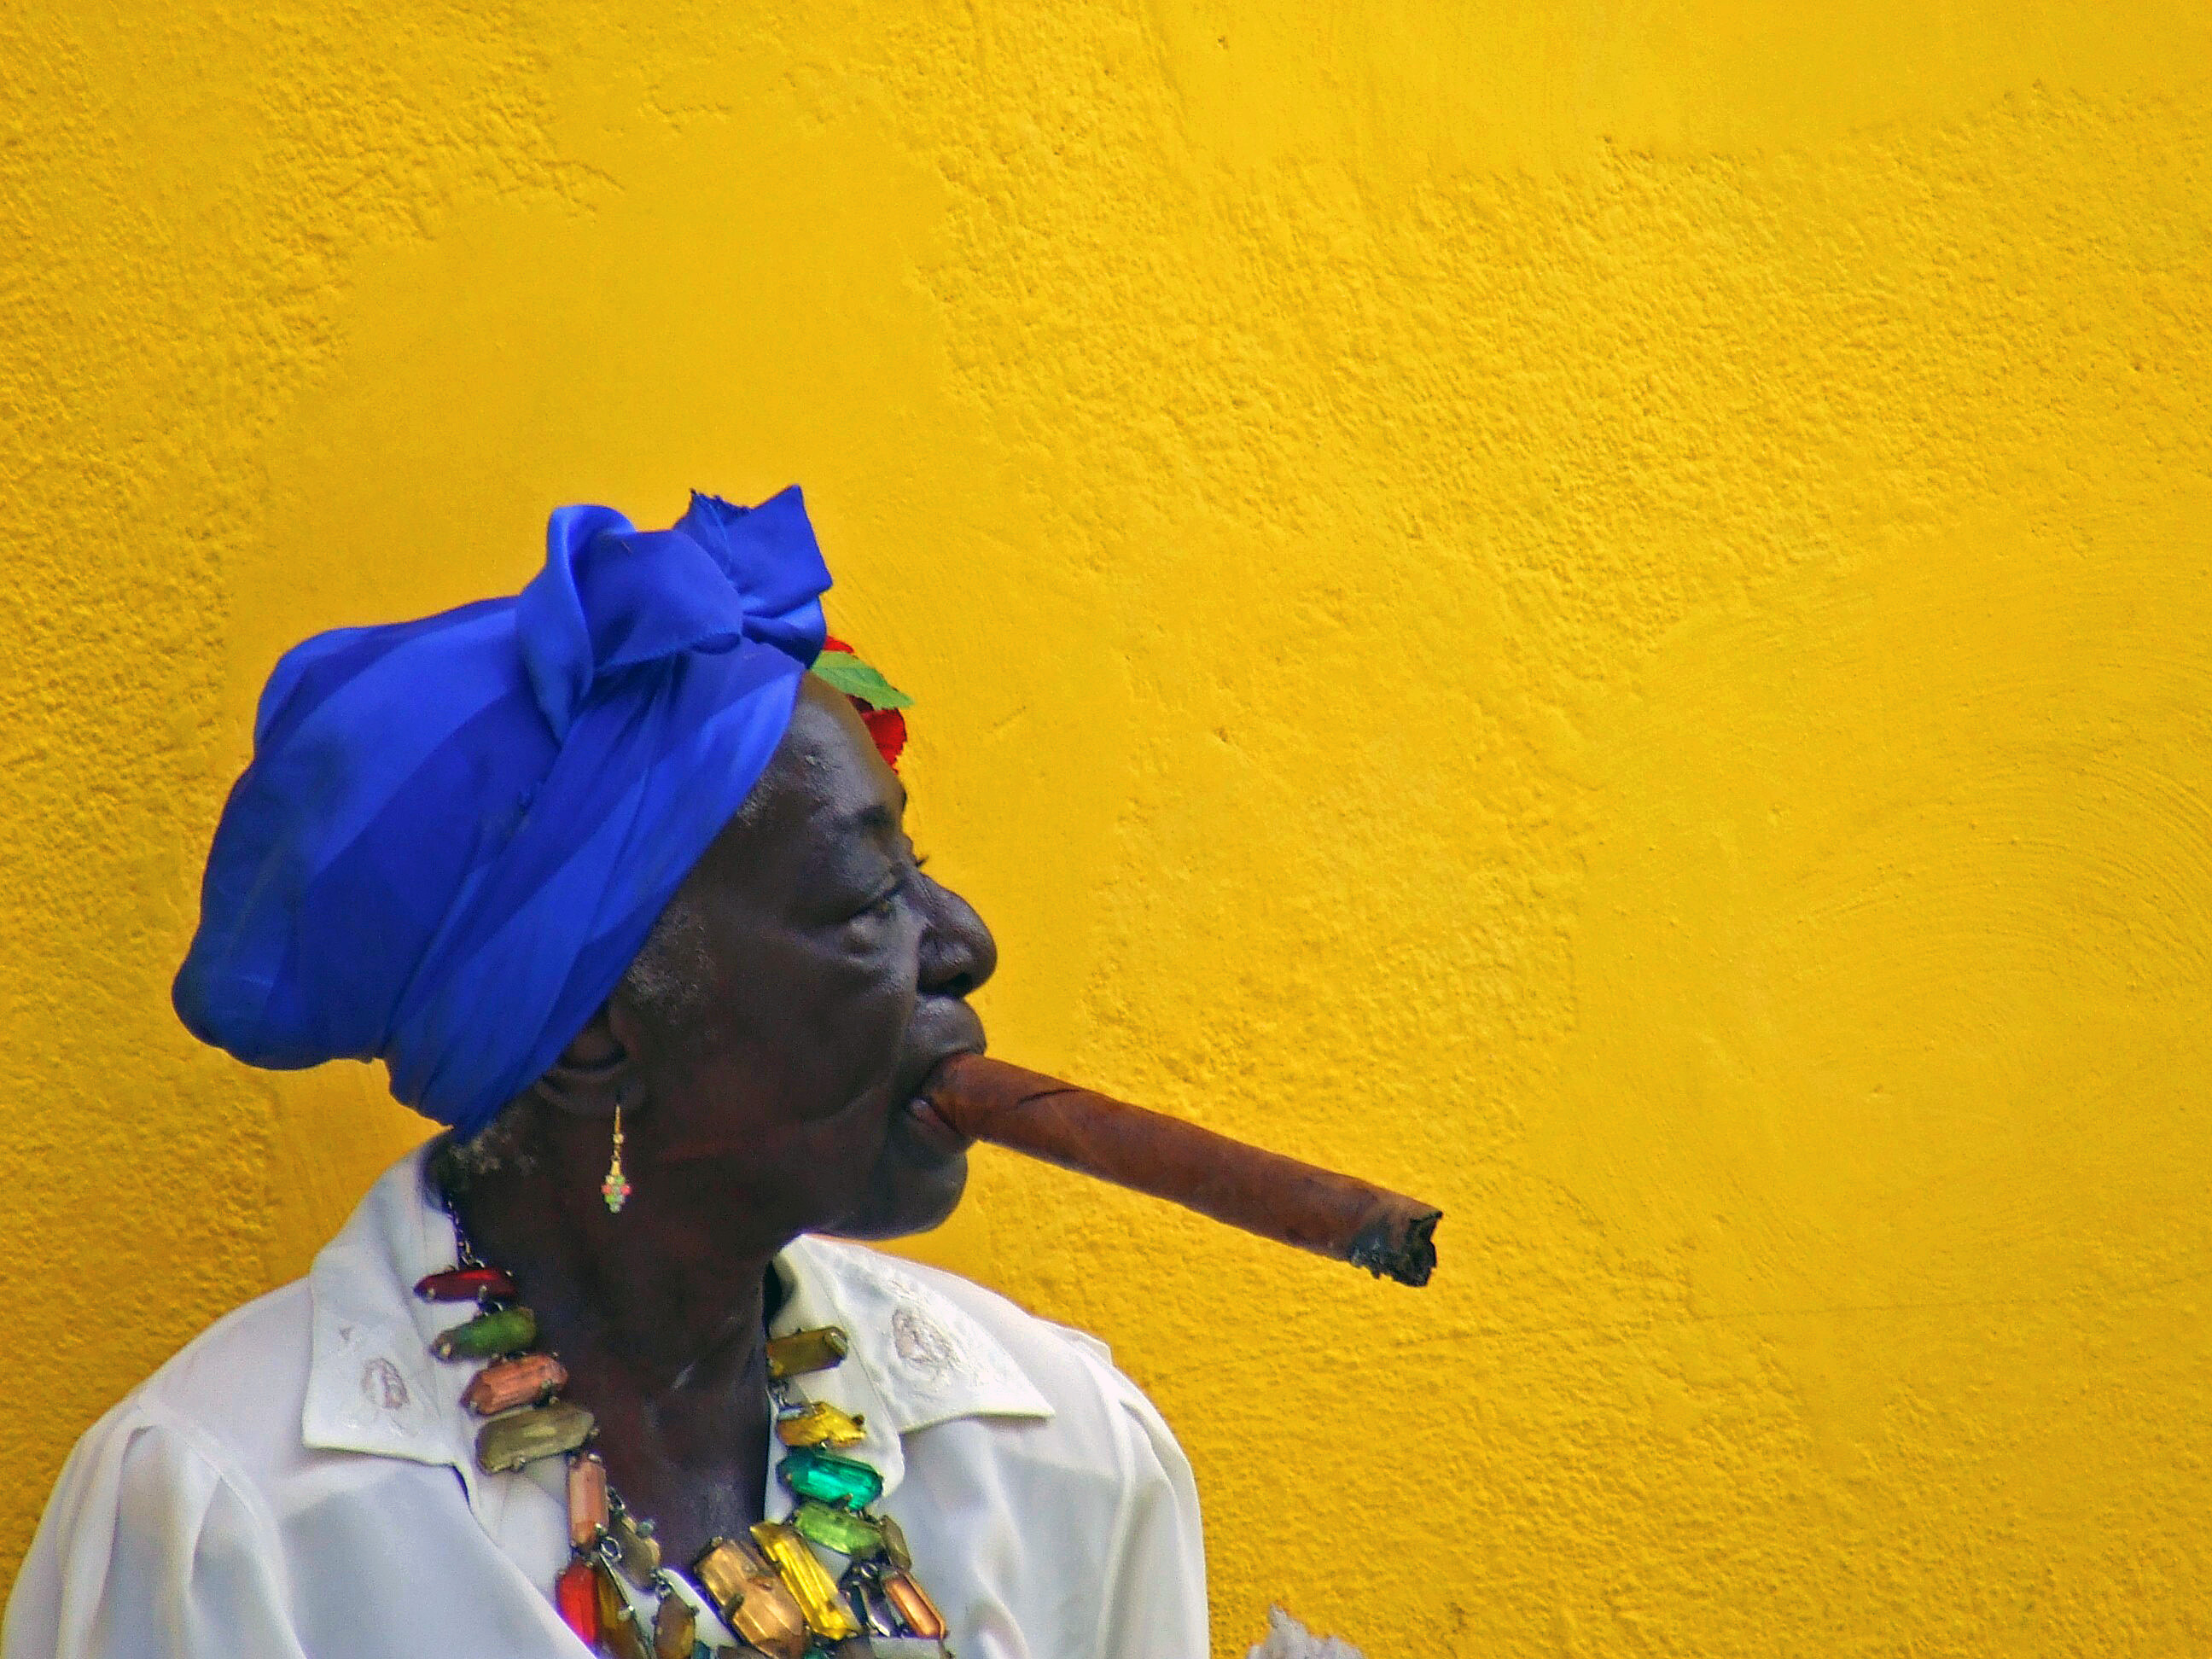 20. A cuban woman with a cigar